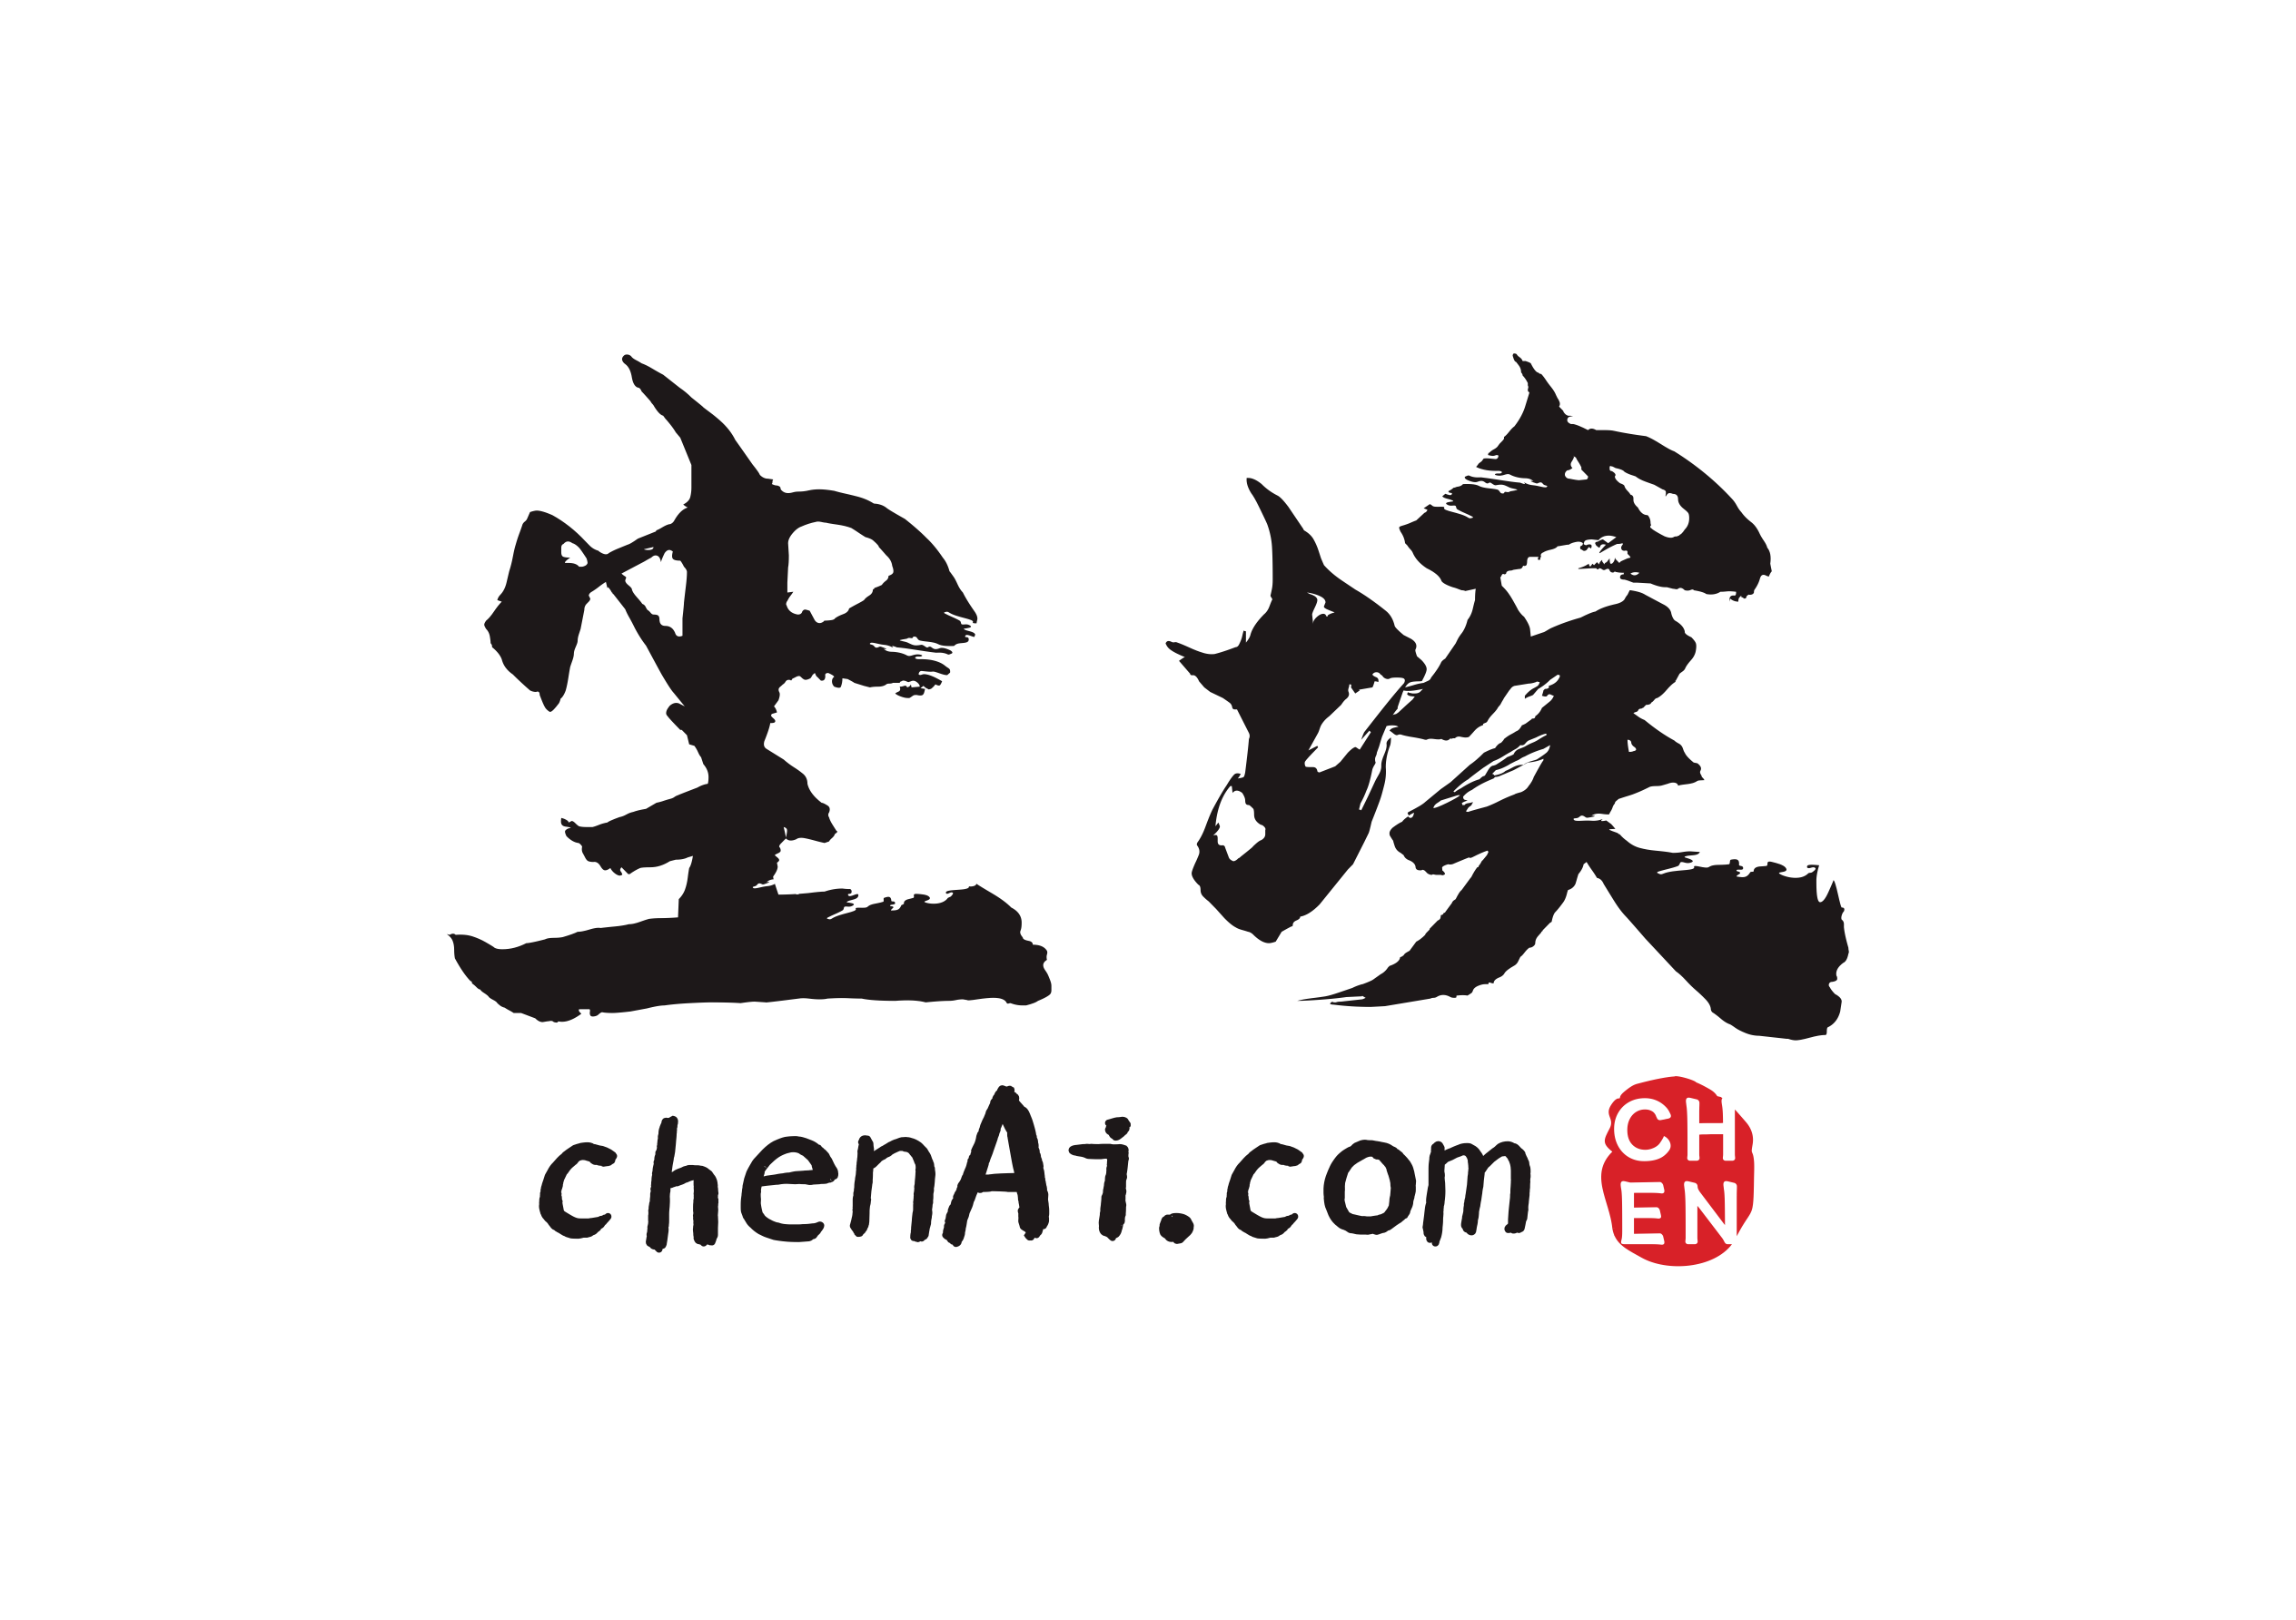 chenAi logo